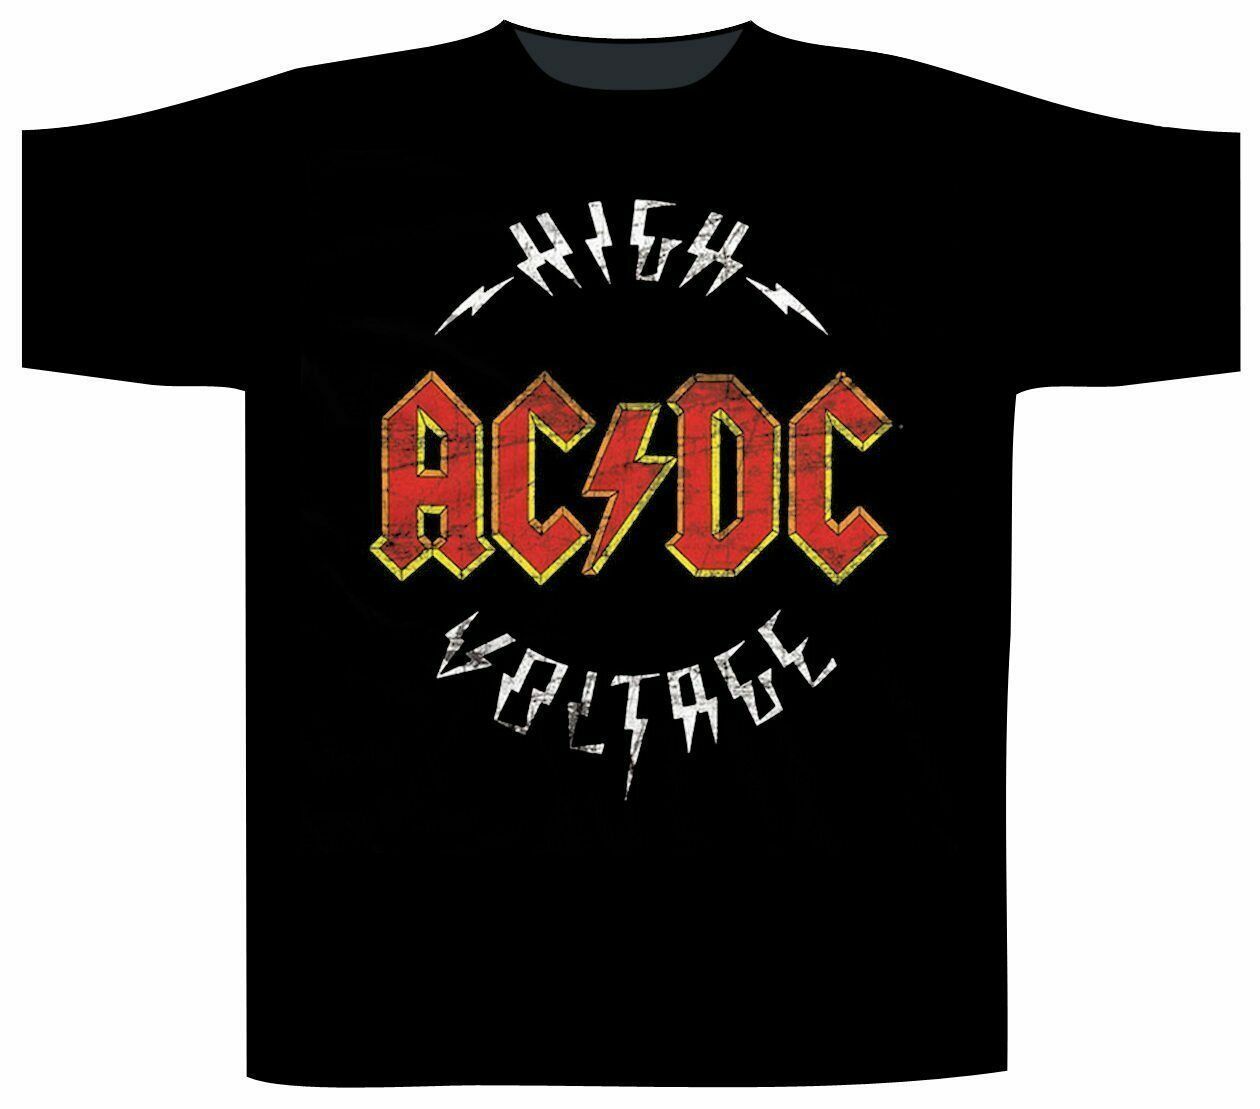 Ac dc high. AC/DC "High Voltage". AC DC Хай Вольтаж. AC DC High Voltage 1975. AC DC High Voltage альбом.